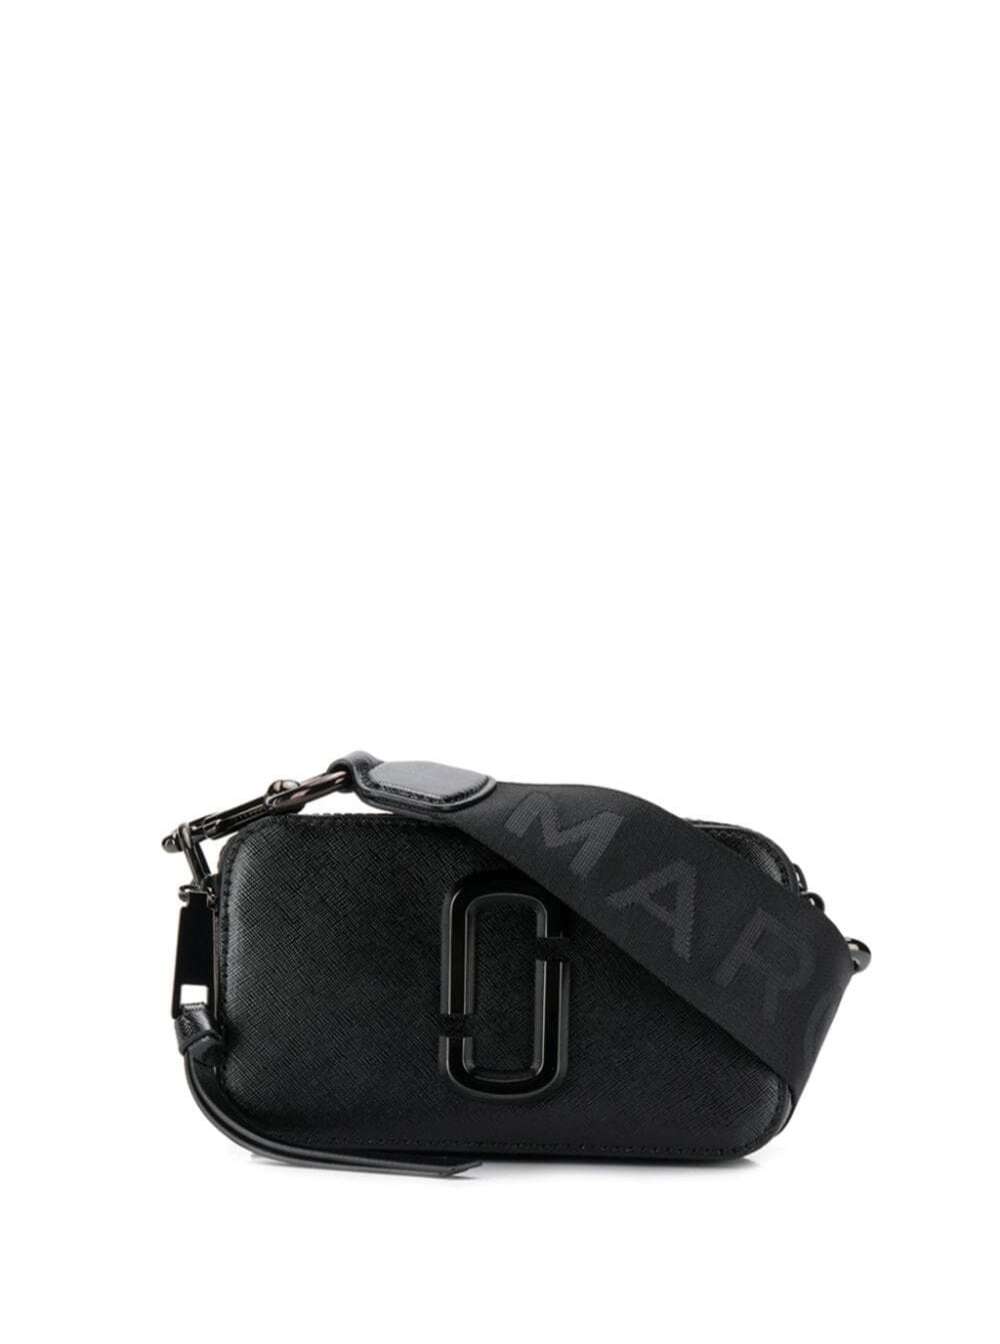 Marc Jacobs The Snapshot Black Leather Crossbody Bag